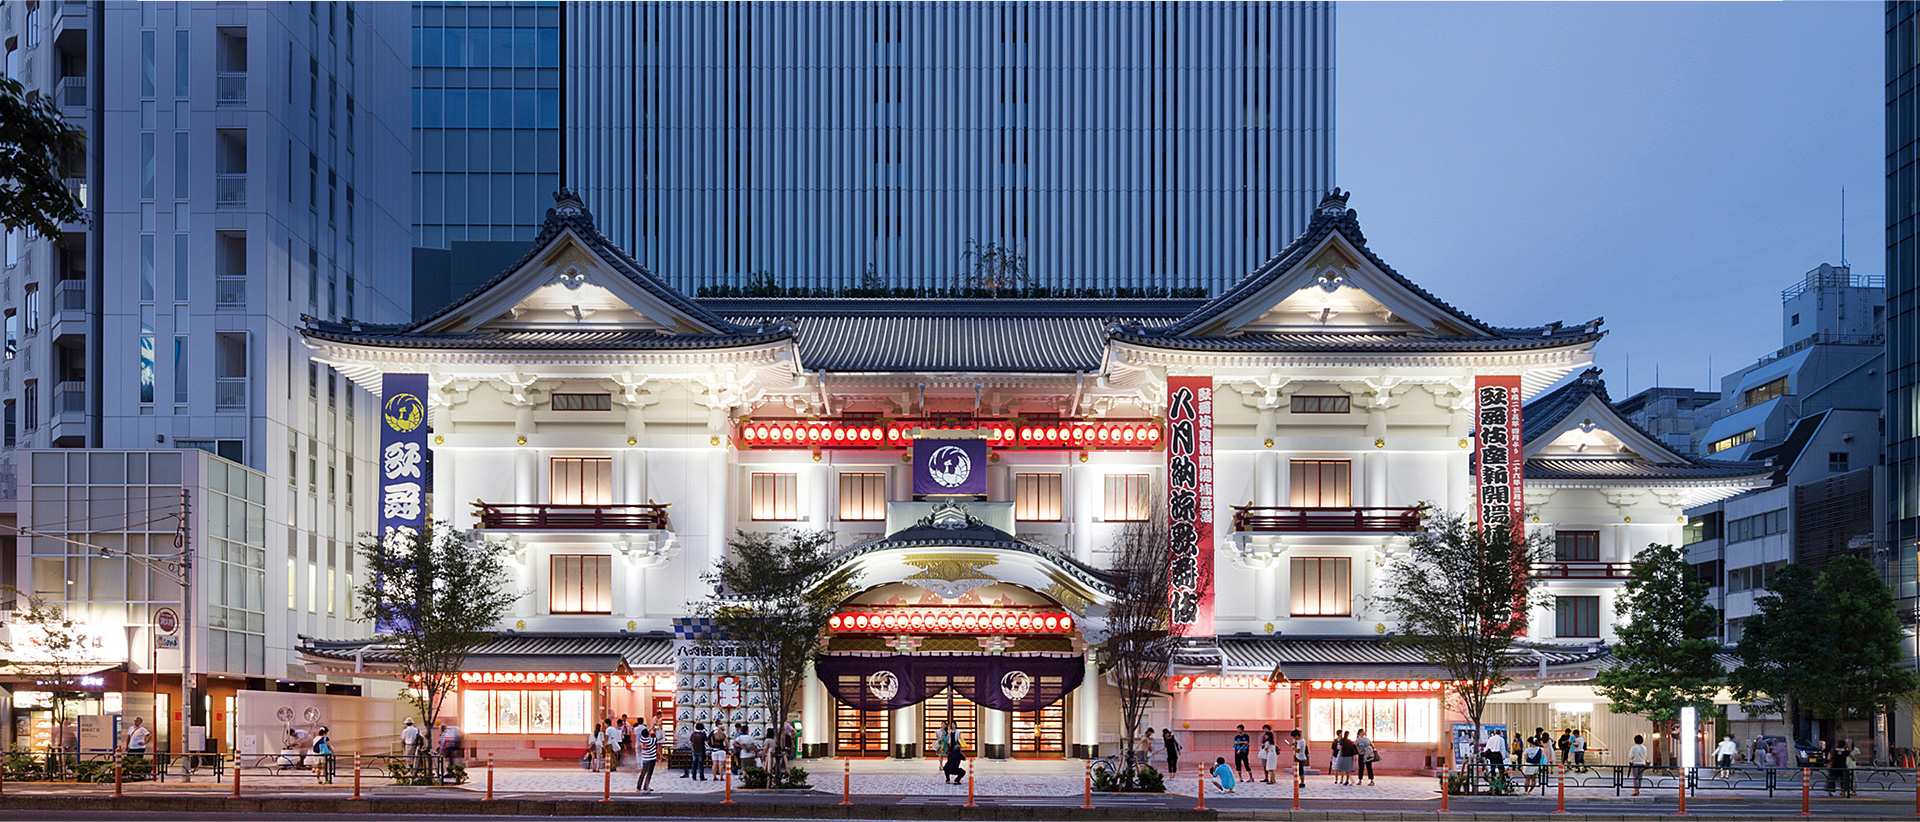 GINZA KABUKIZA (Kabuki theater), the fusion of traditional skills and advanced technology